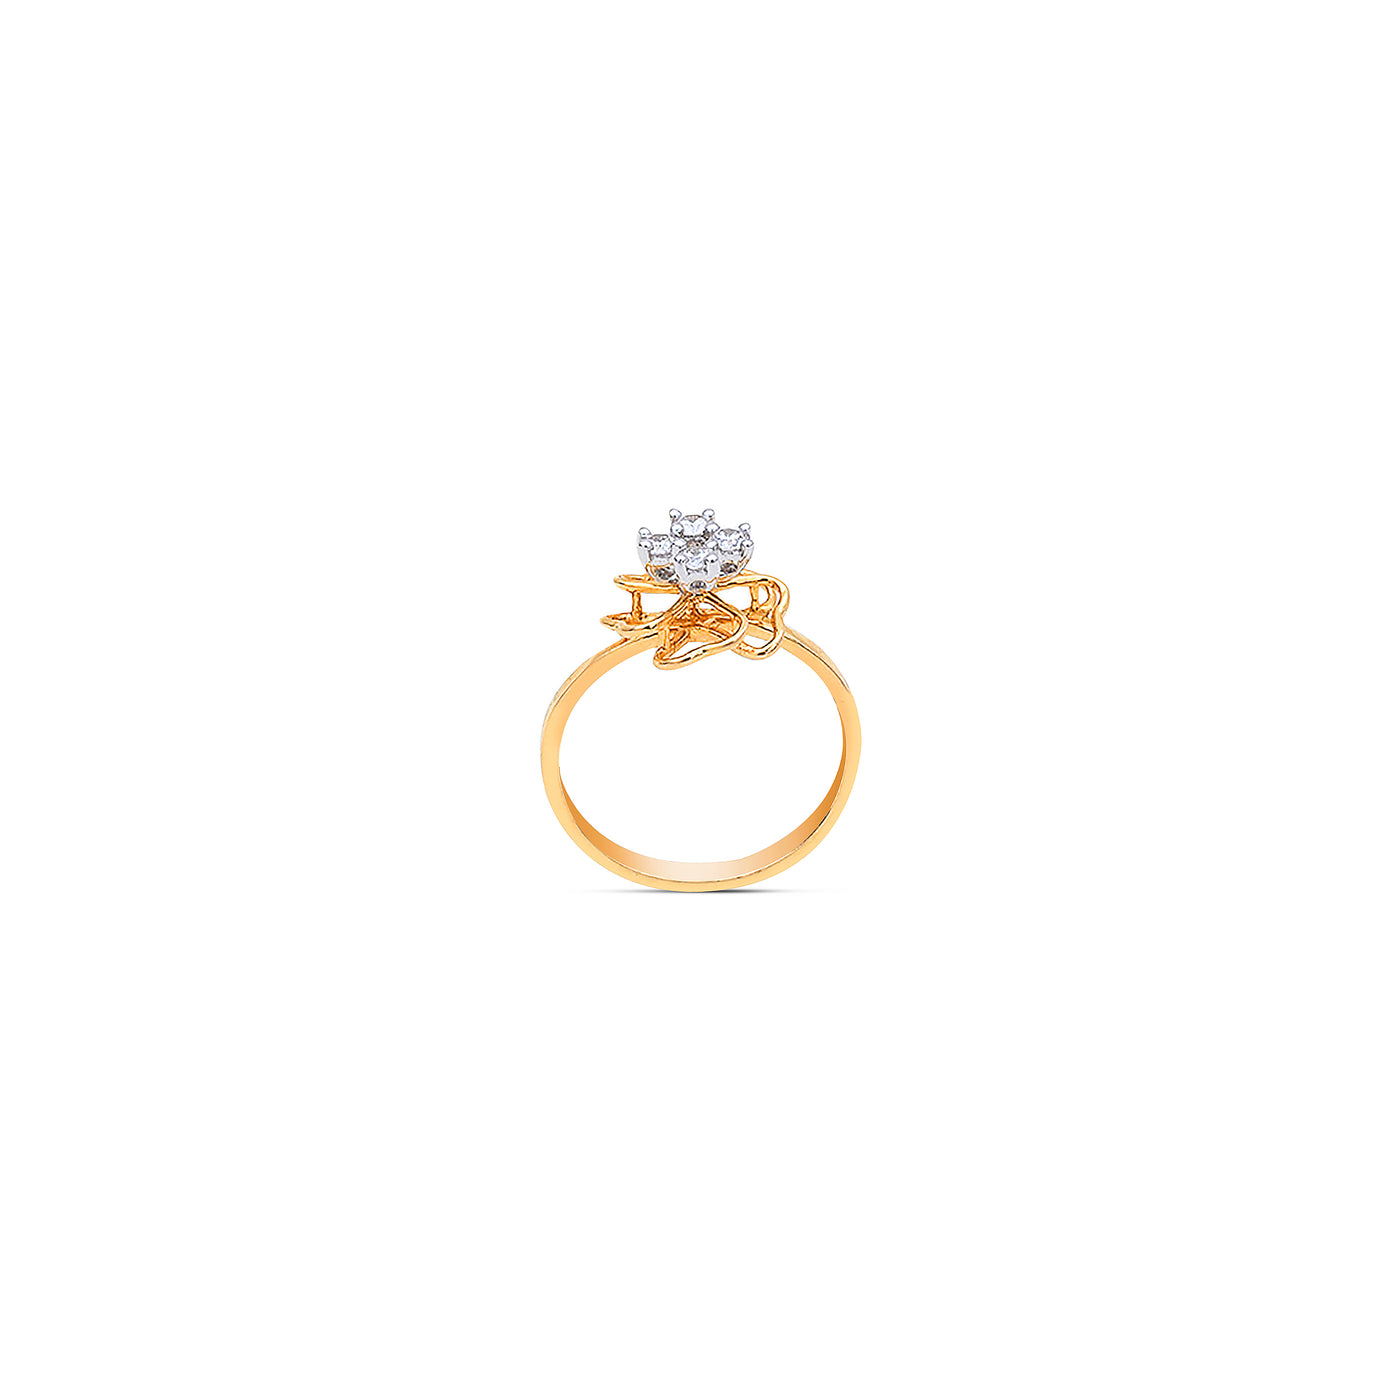 The Azure Diamond Ring